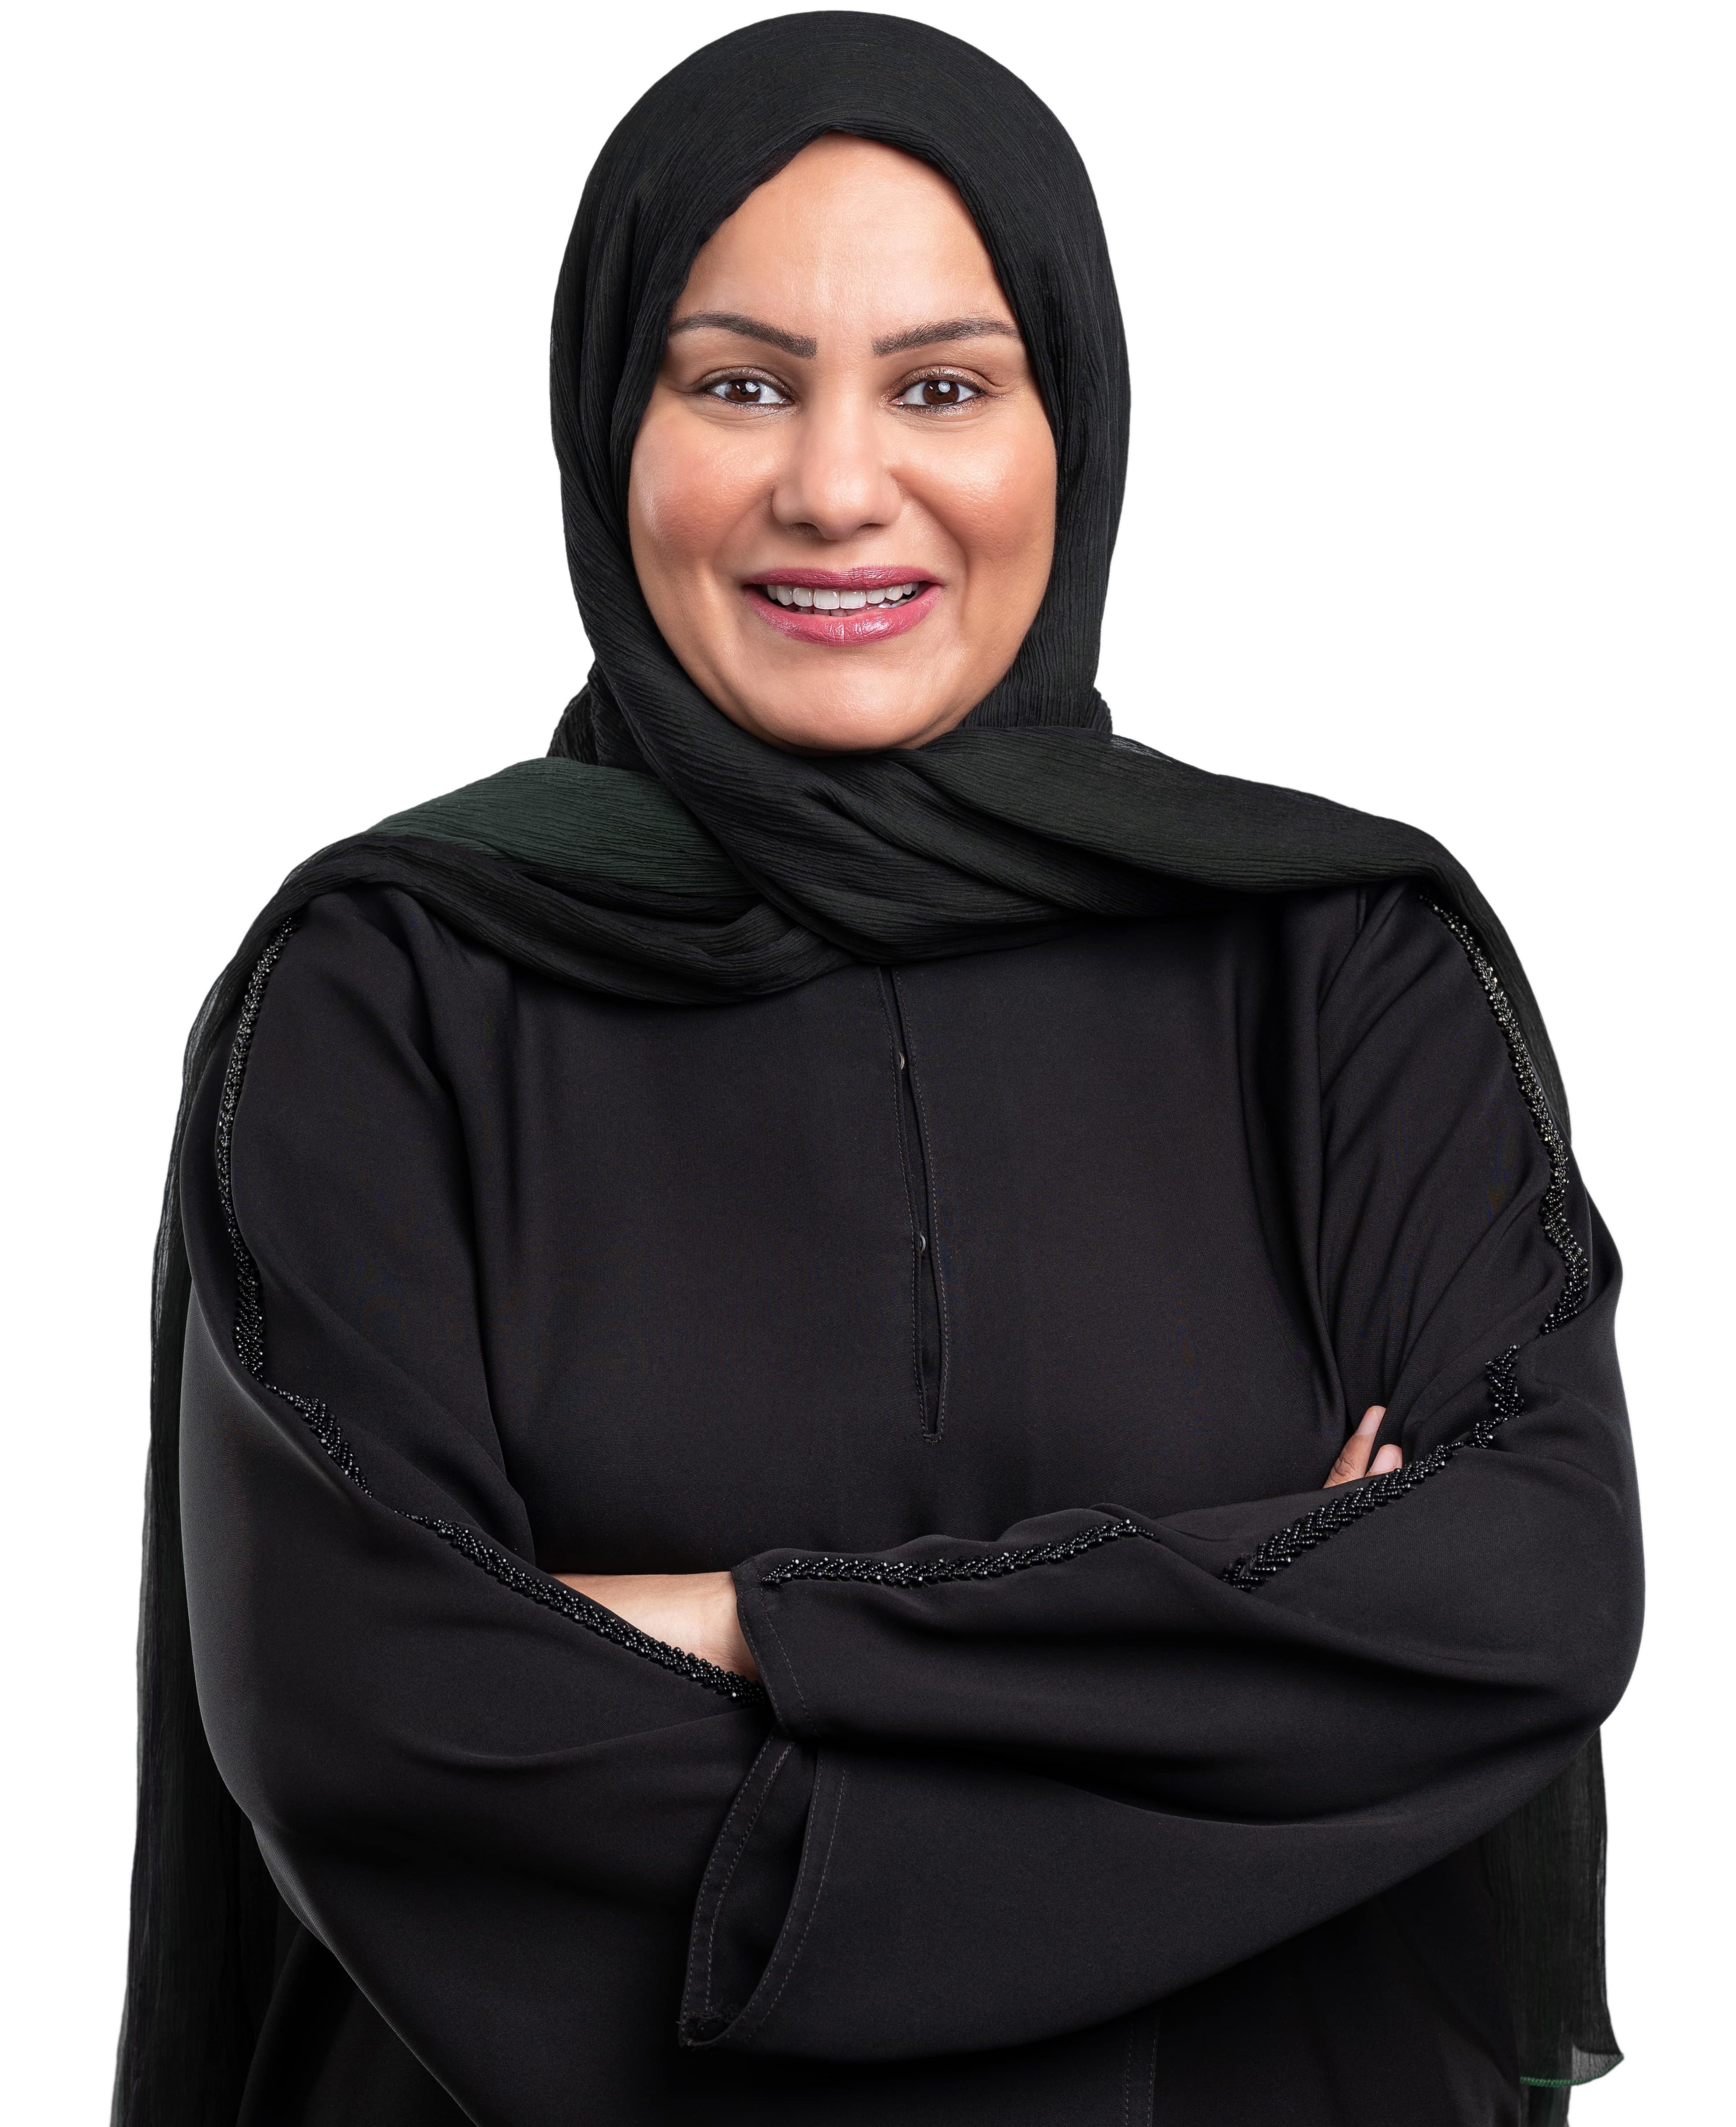 Dr. Ayesha Almemari